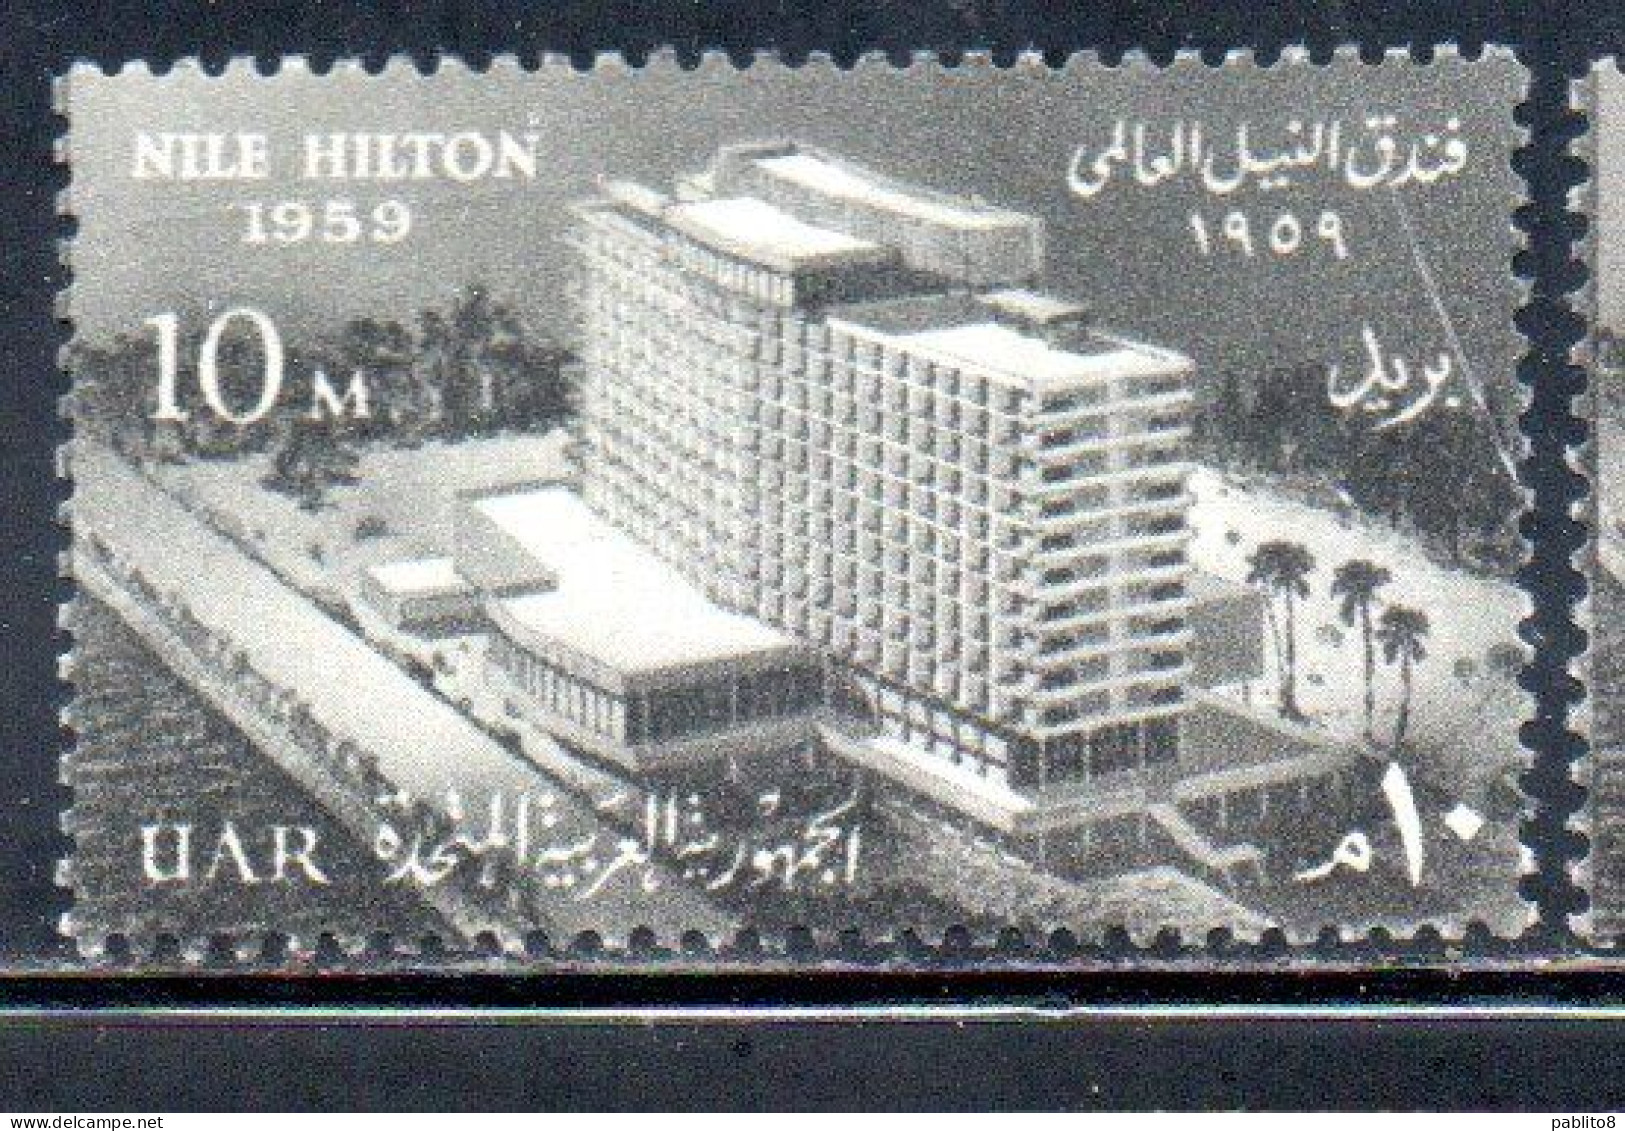 UAR EGYPT EGITTO 1959 OPENING OF THE NILE HILTON HOTEL CAIRO 10m MNH - Nuovi